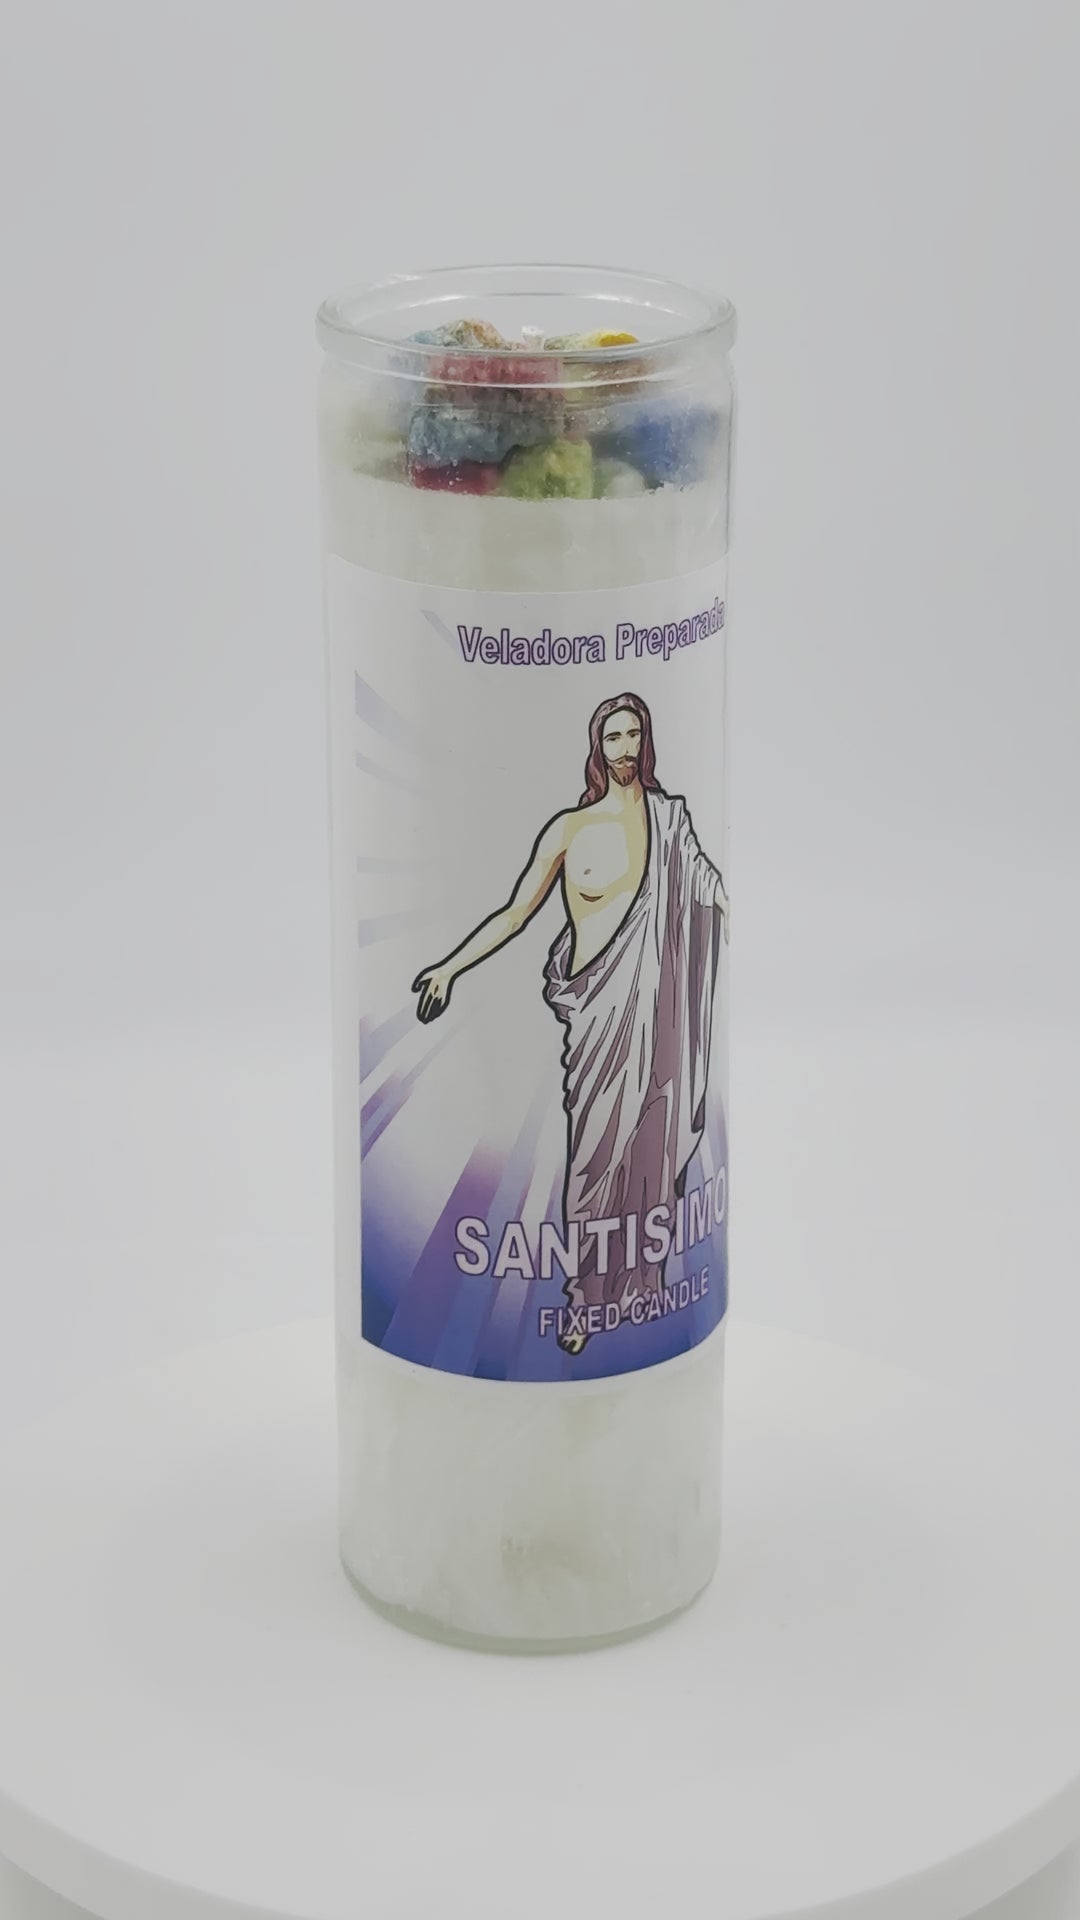 SANTISIMO -Palm Wax Candle/Vela